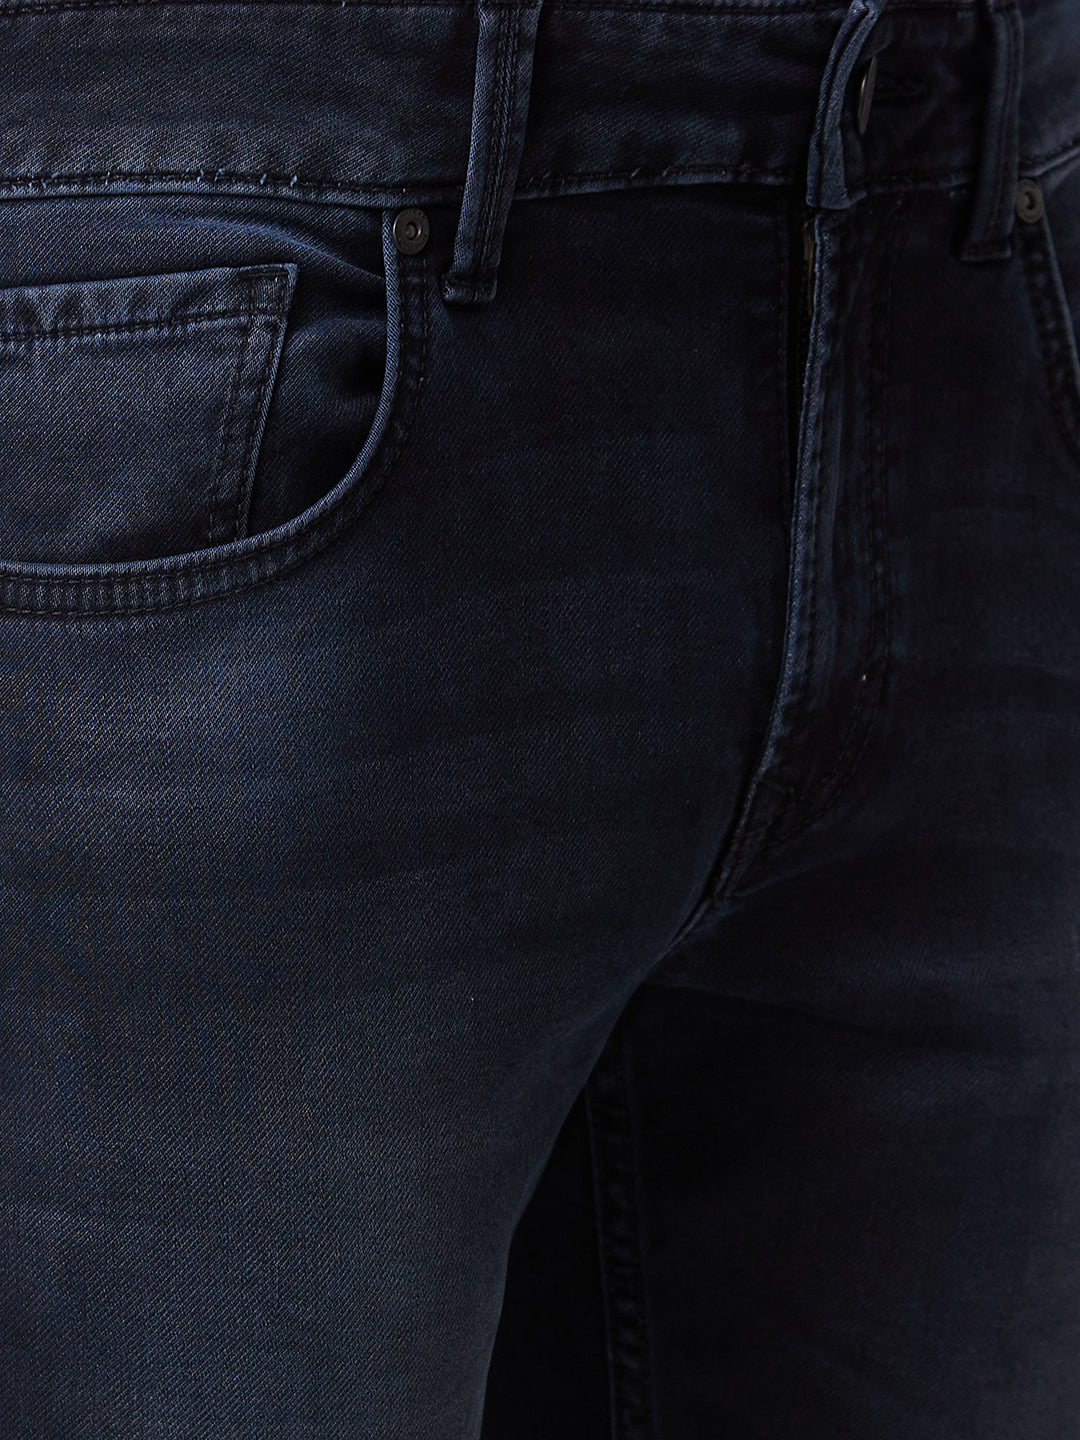 Spykar Mid Rise Bootcut Fit Black Jeans For Men